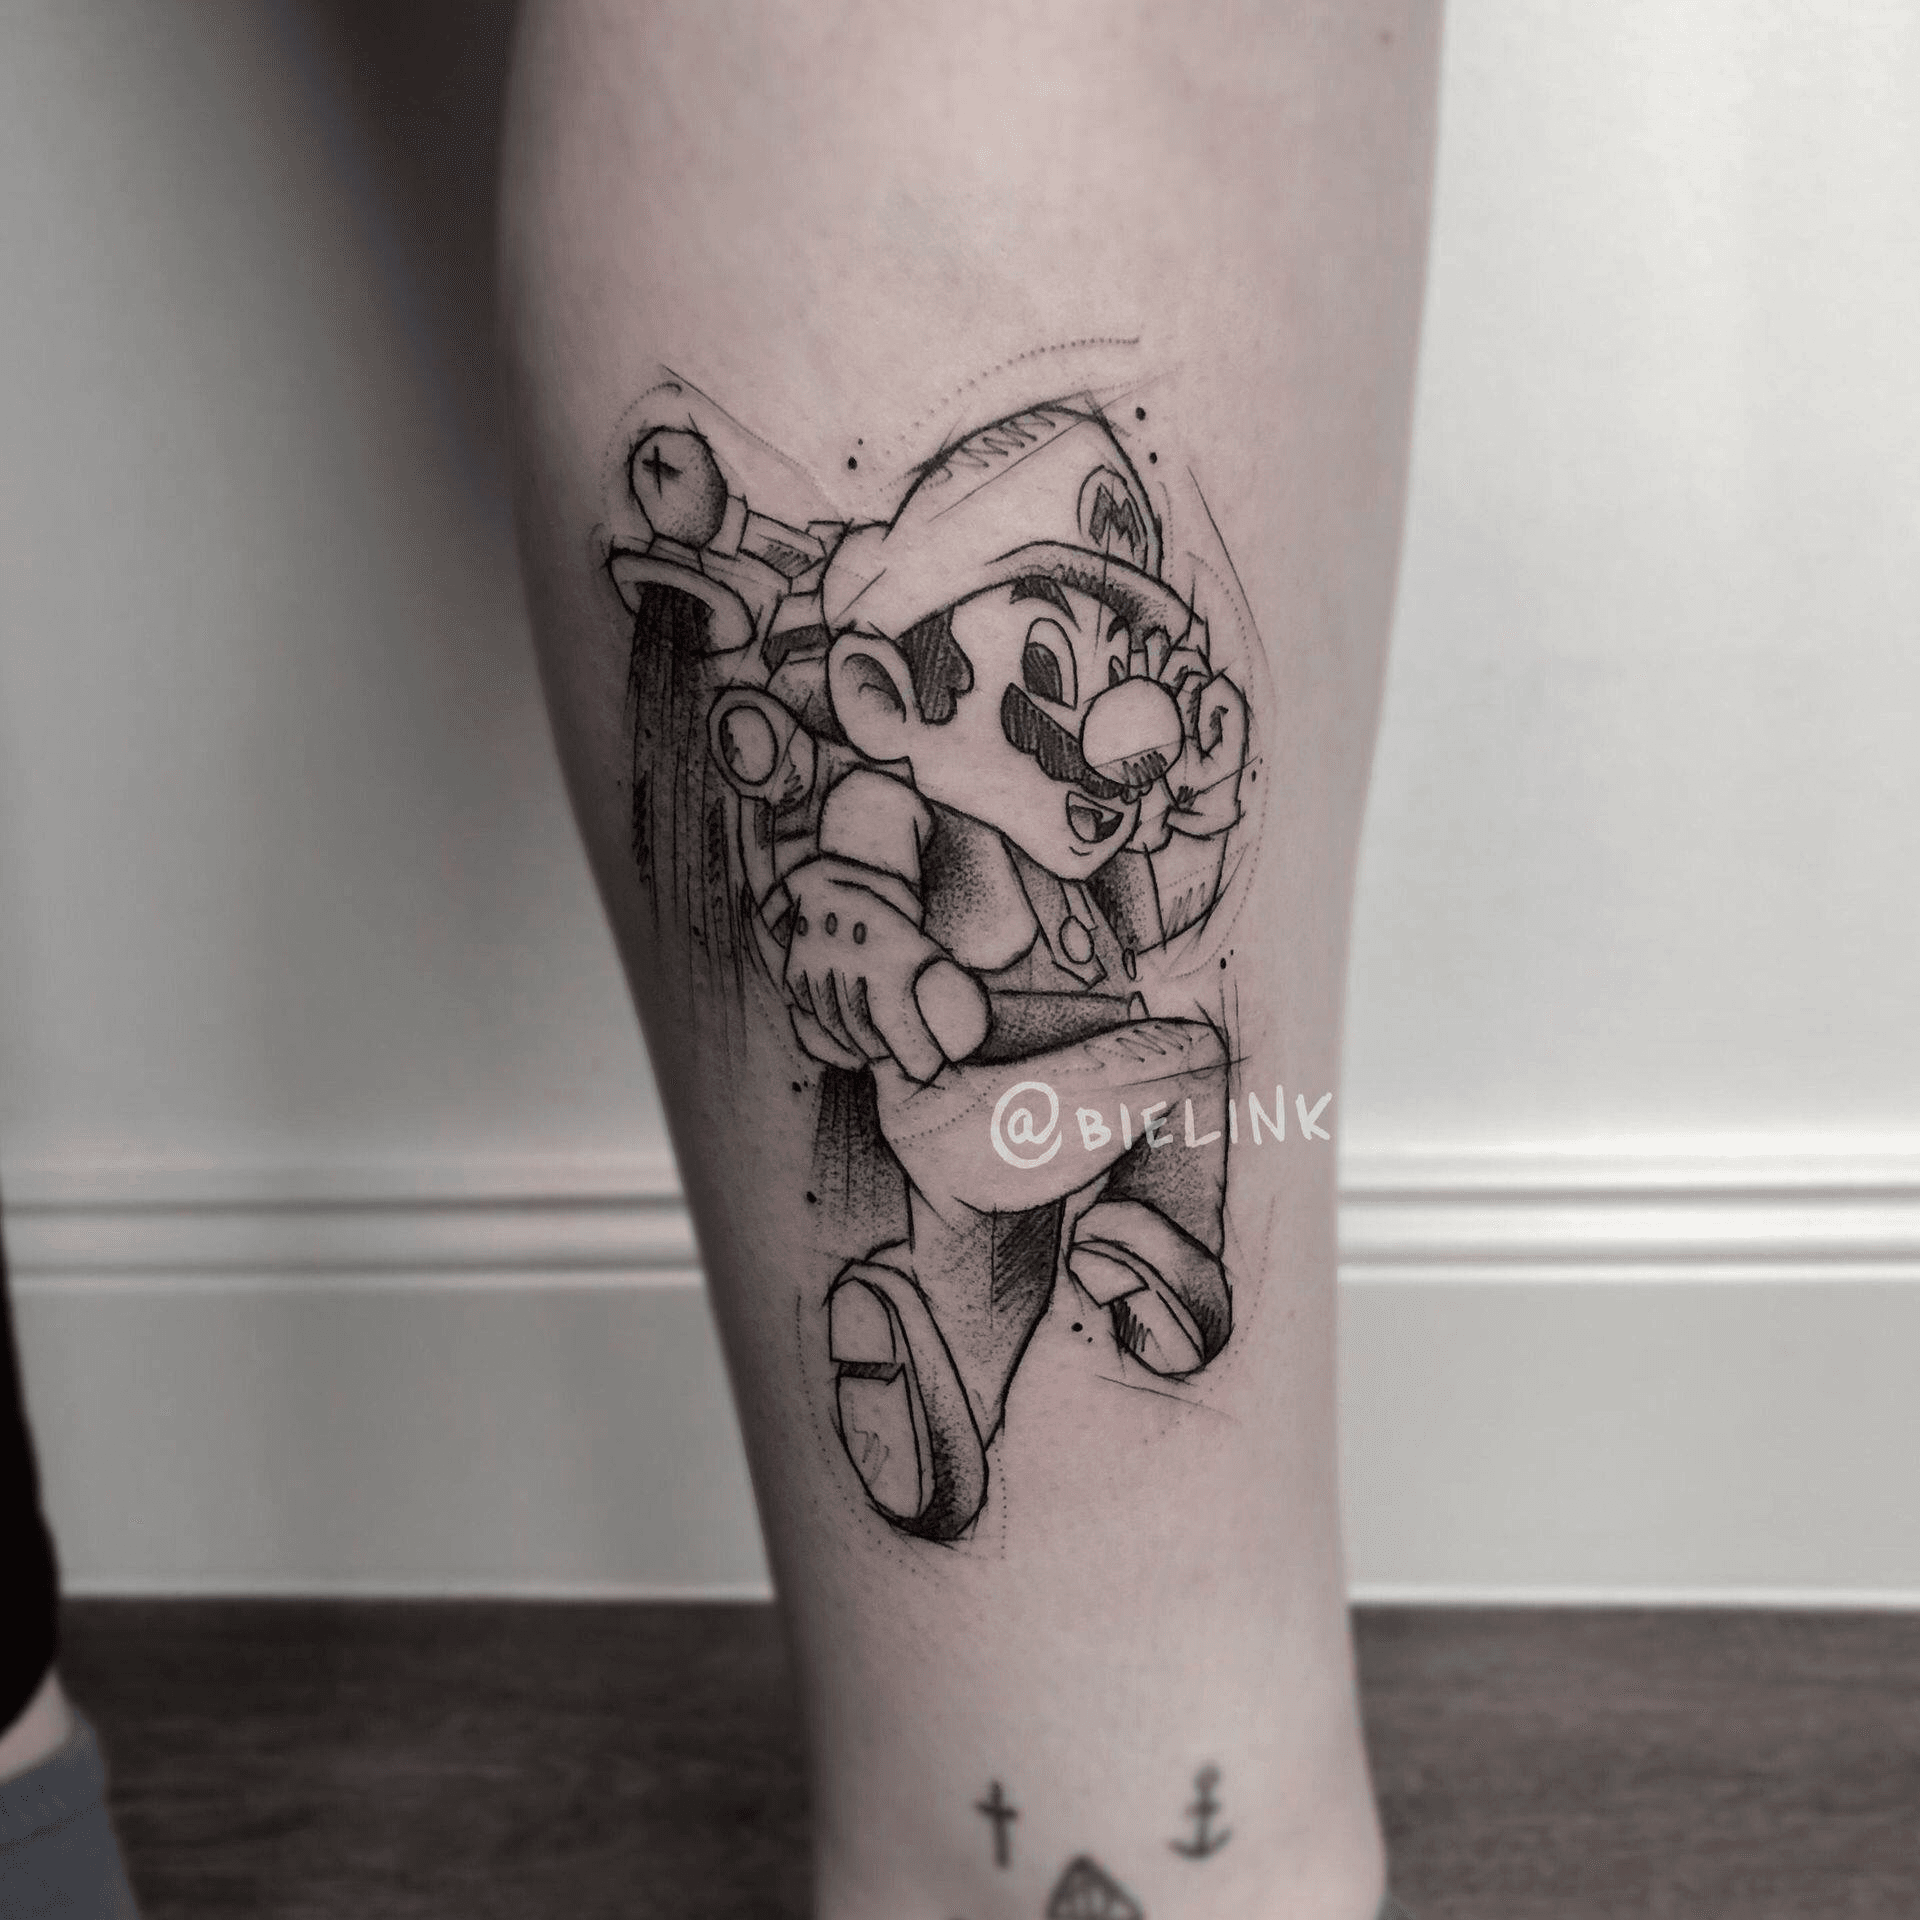 Super Mario Tattoos  All Things Tattoo